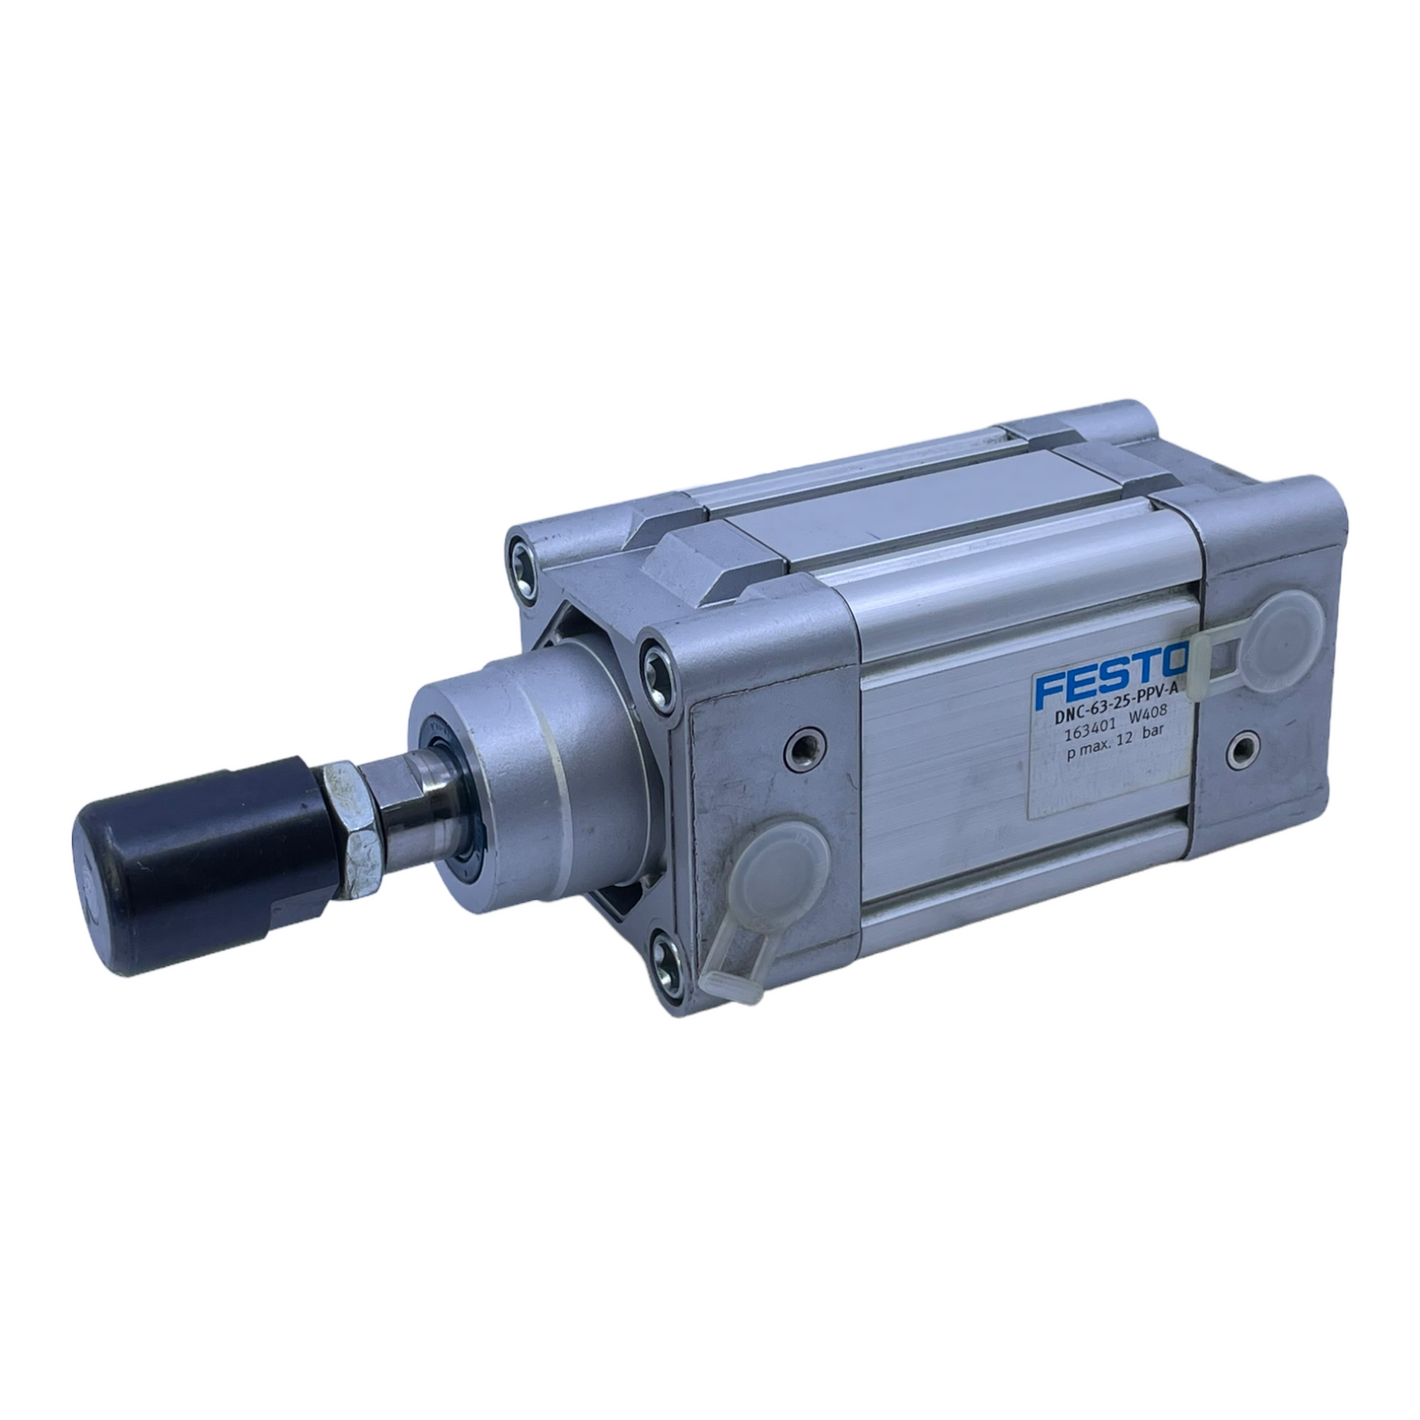 Festo DNC-63-25-PPV-A pneumatic cylinder 163401 12bar